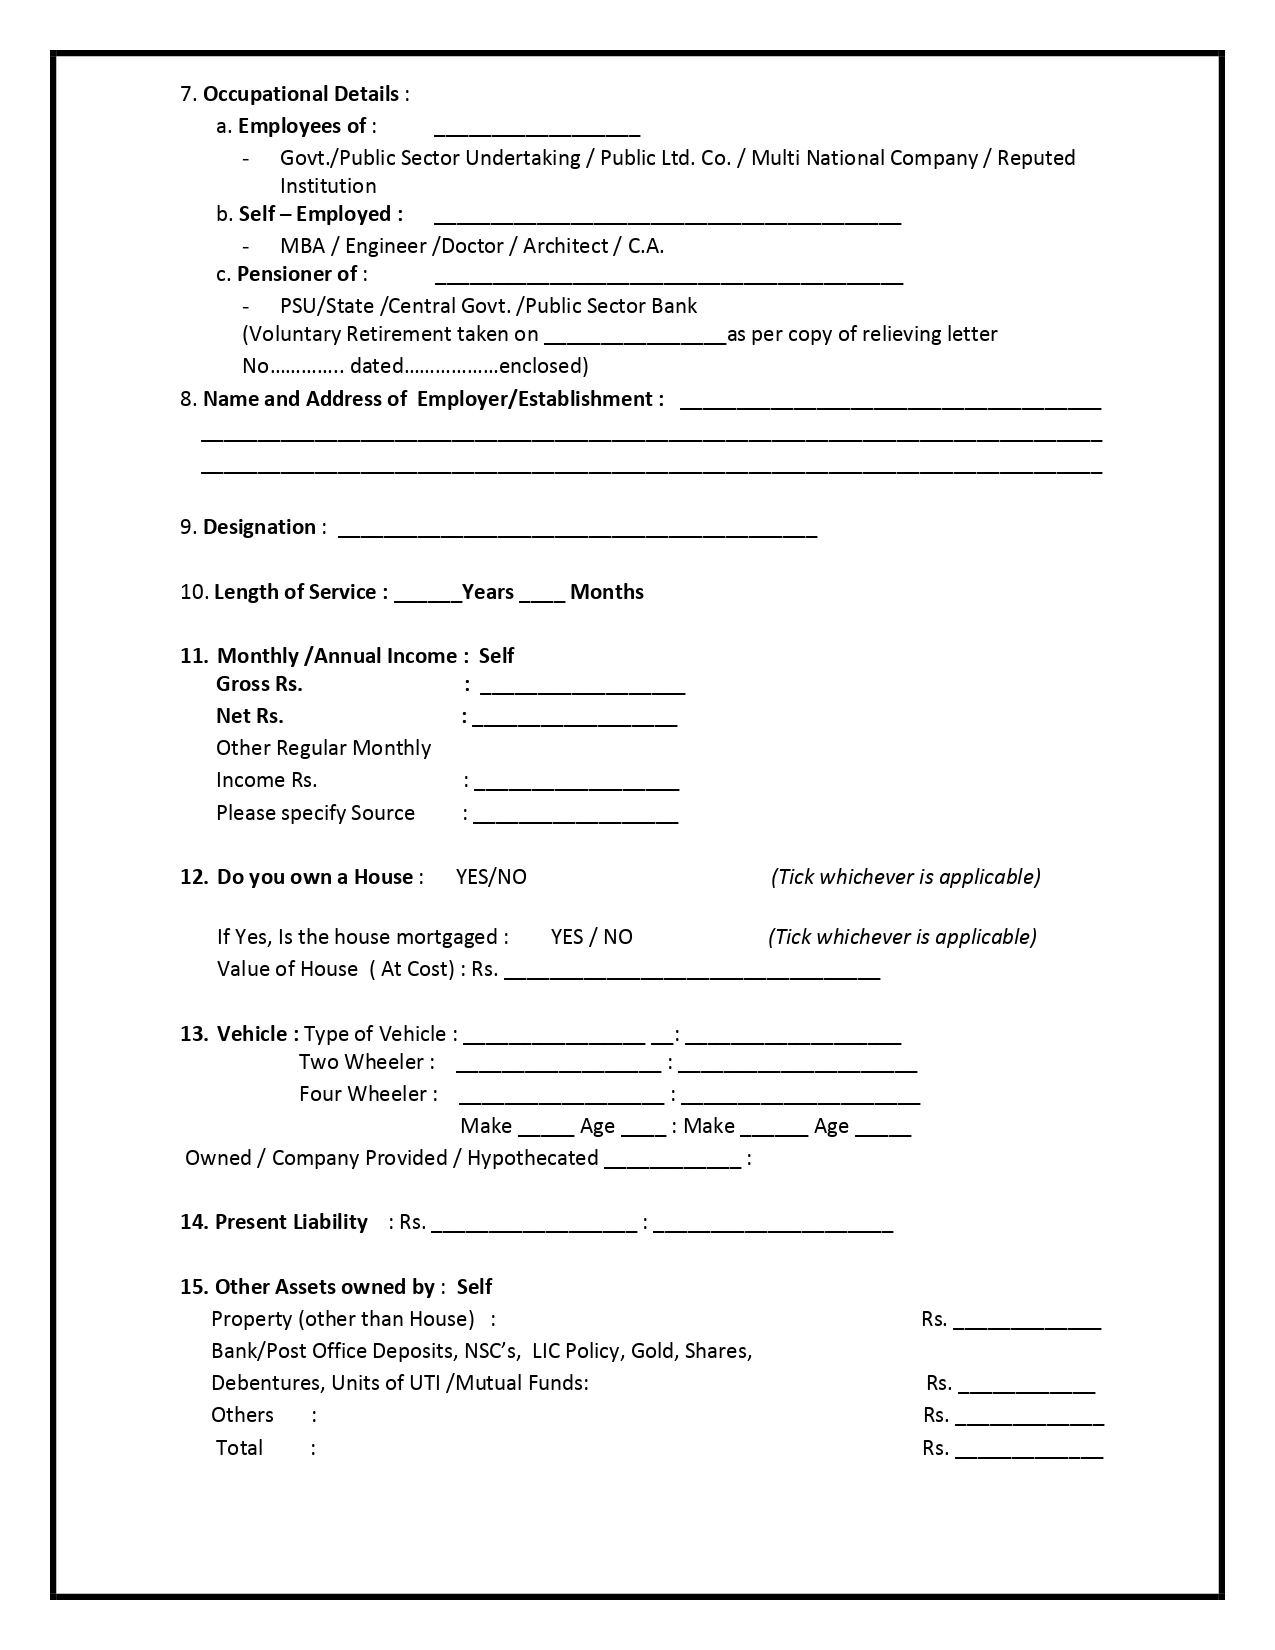 sbi xpress credit loan application form